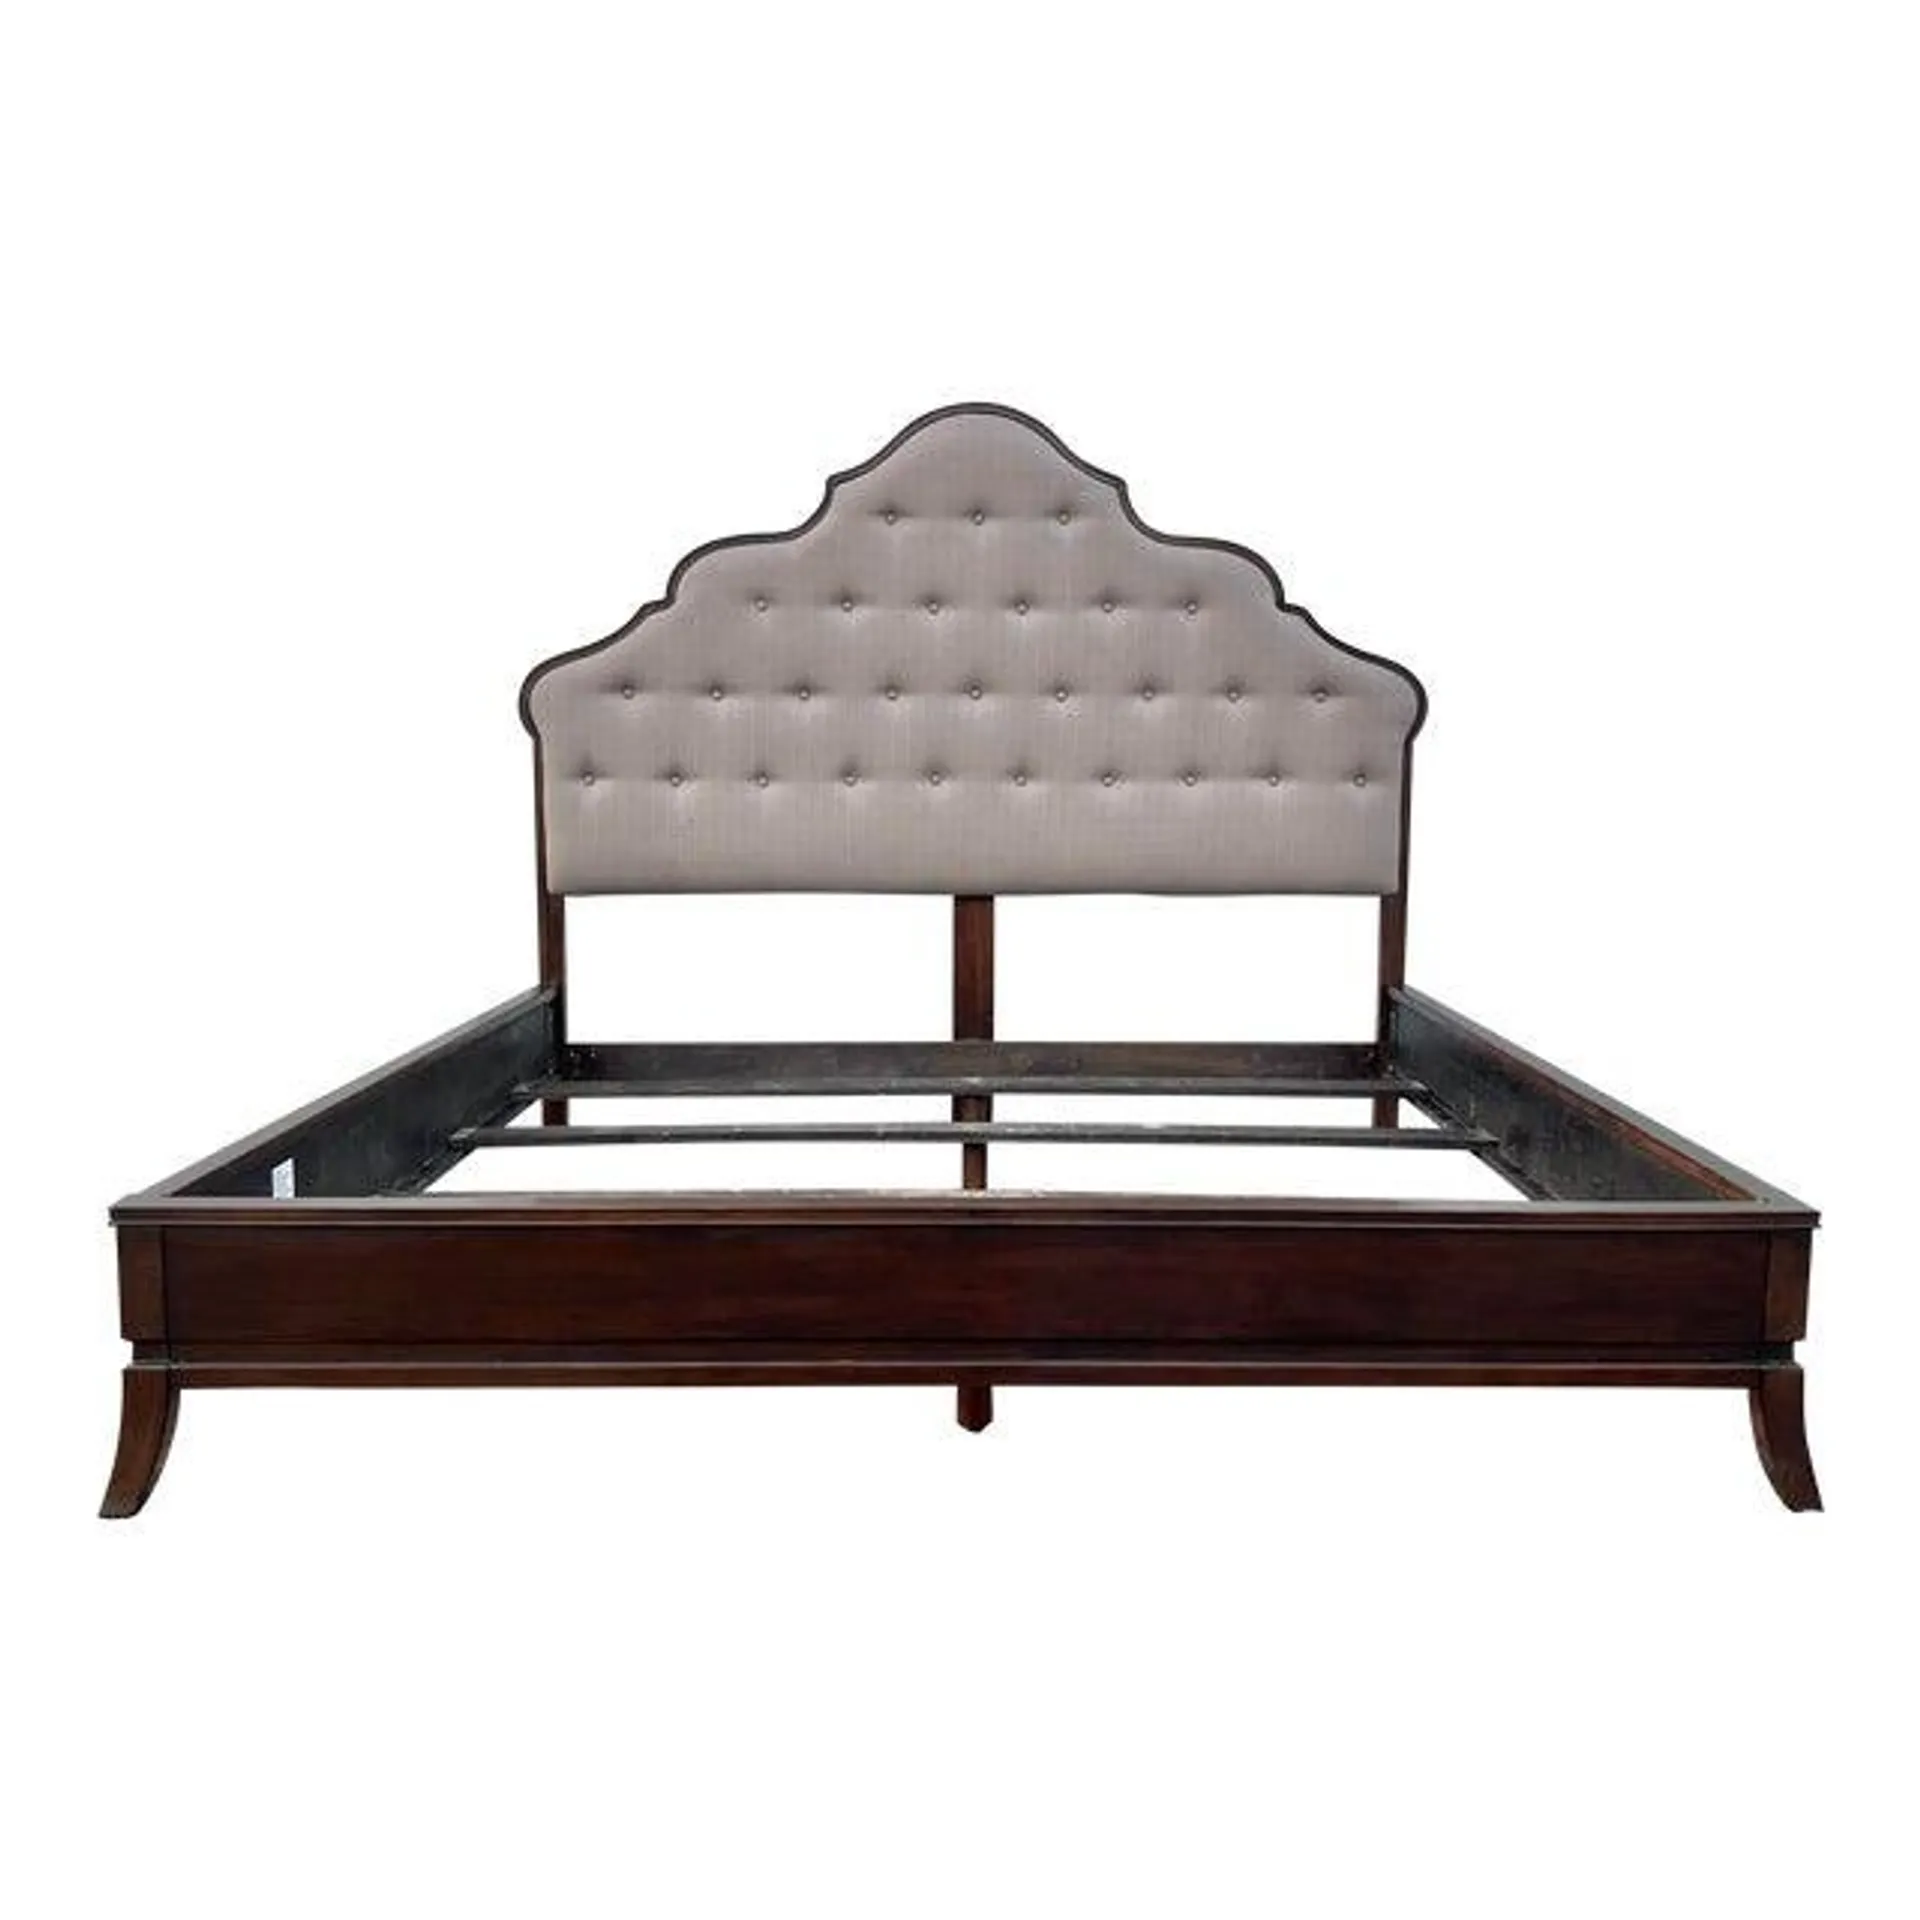 Drexel Heritage Dalliance Serendipity Upholstered Headboard Bed - King Size